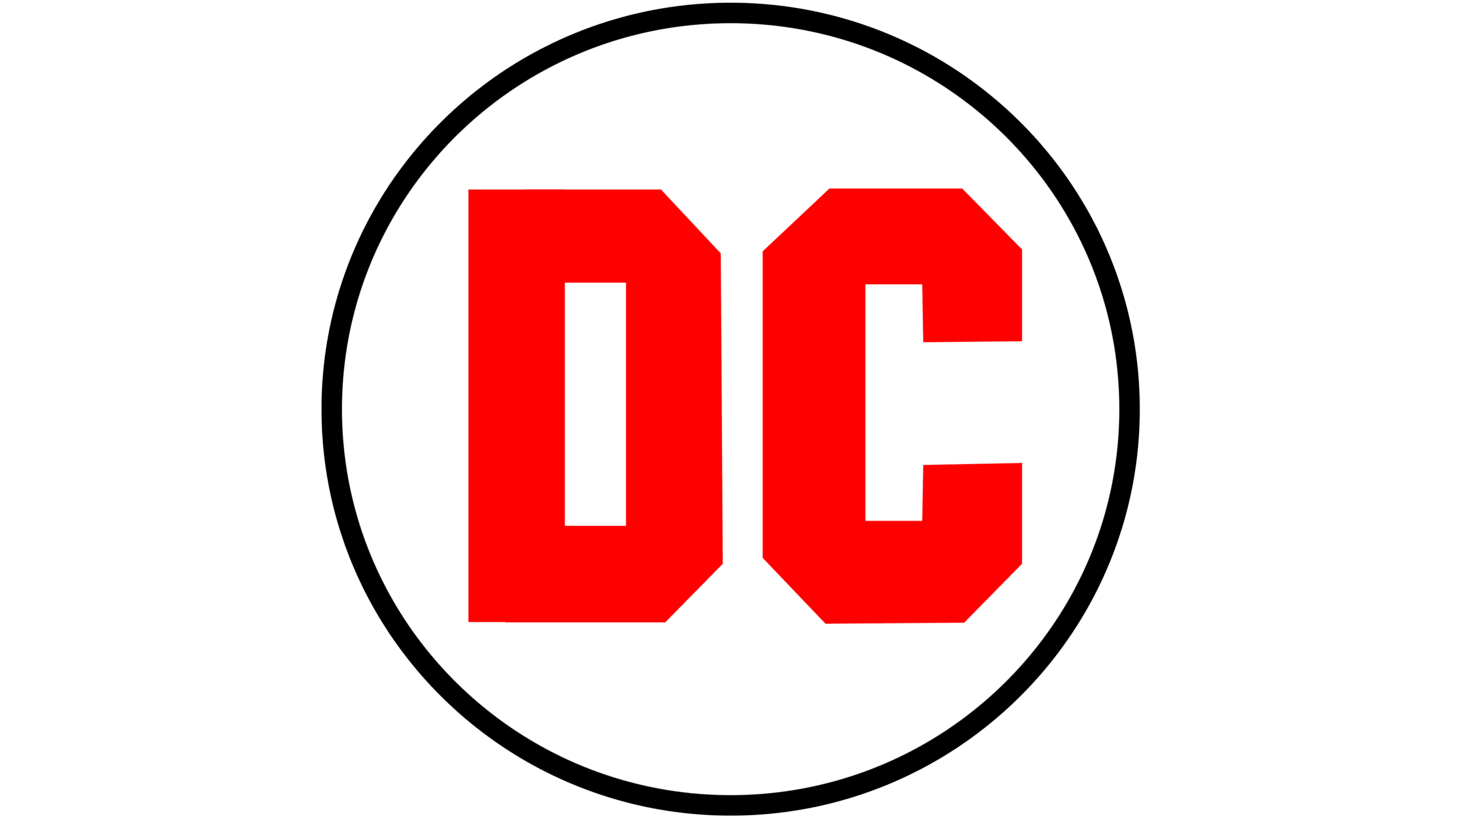 Dc comics sign 1972 1974